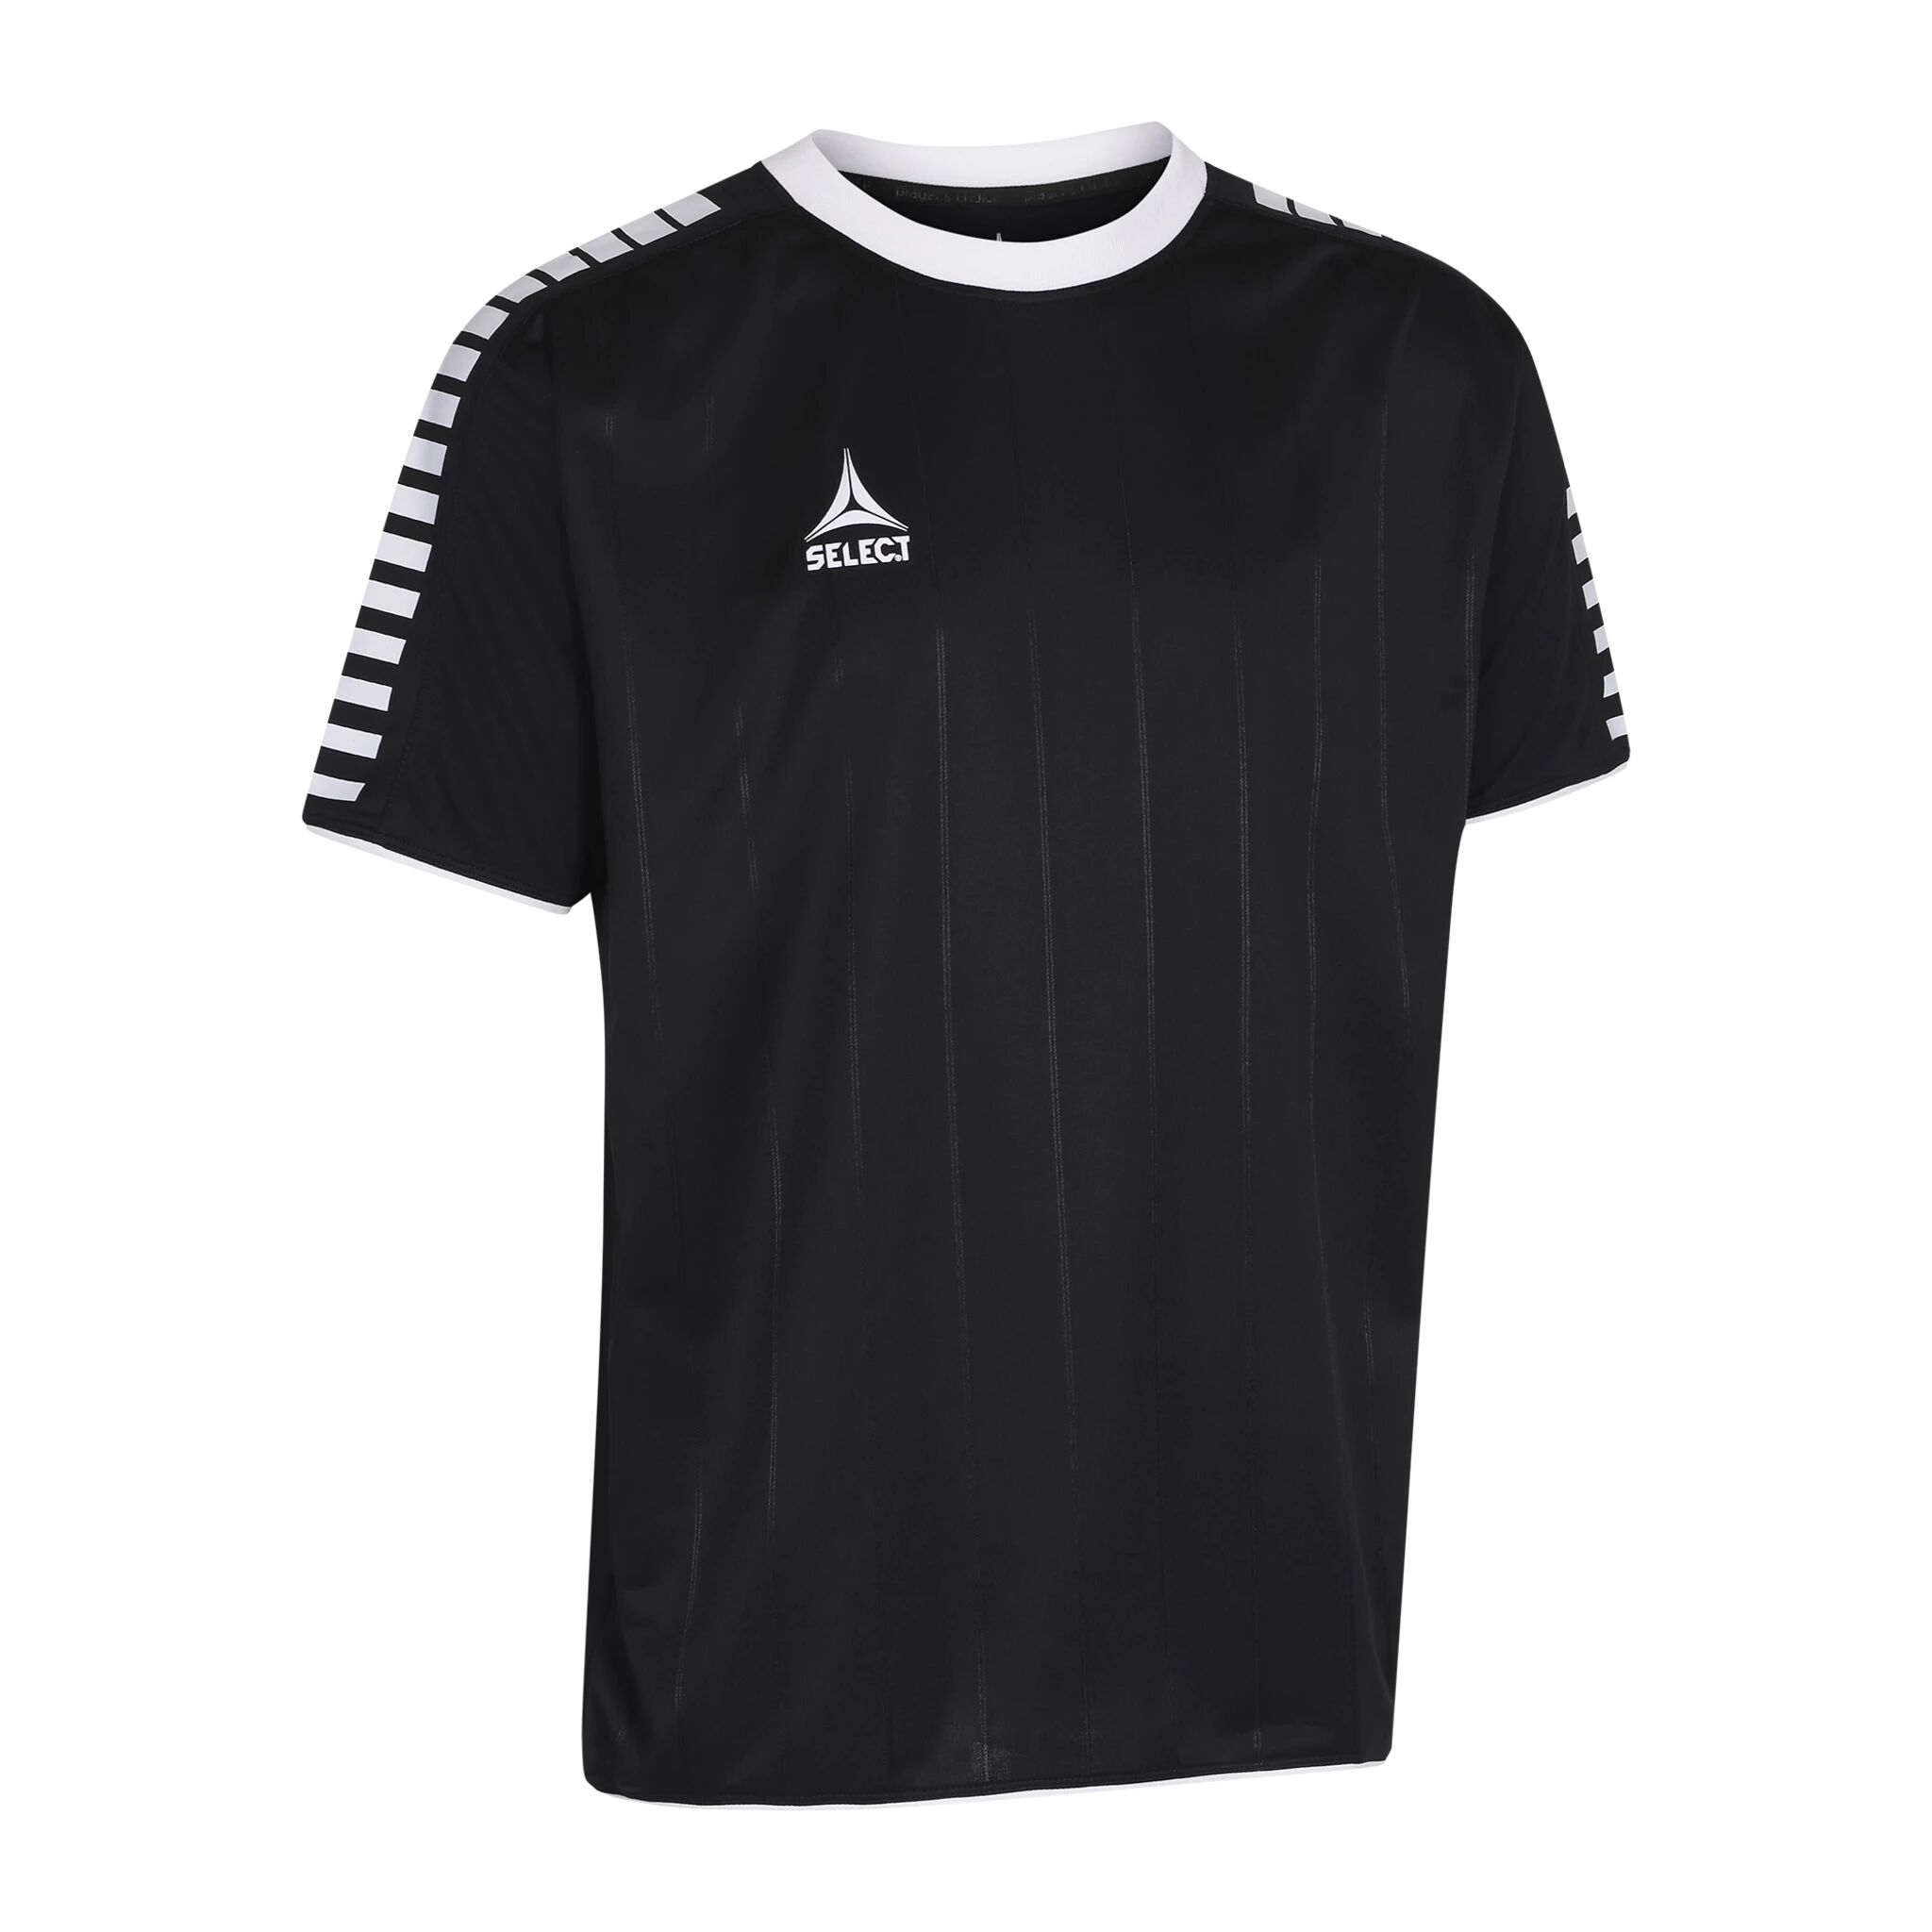 Select Player shirt S/S Argentina, fotballtrøye senior XXL BLACK